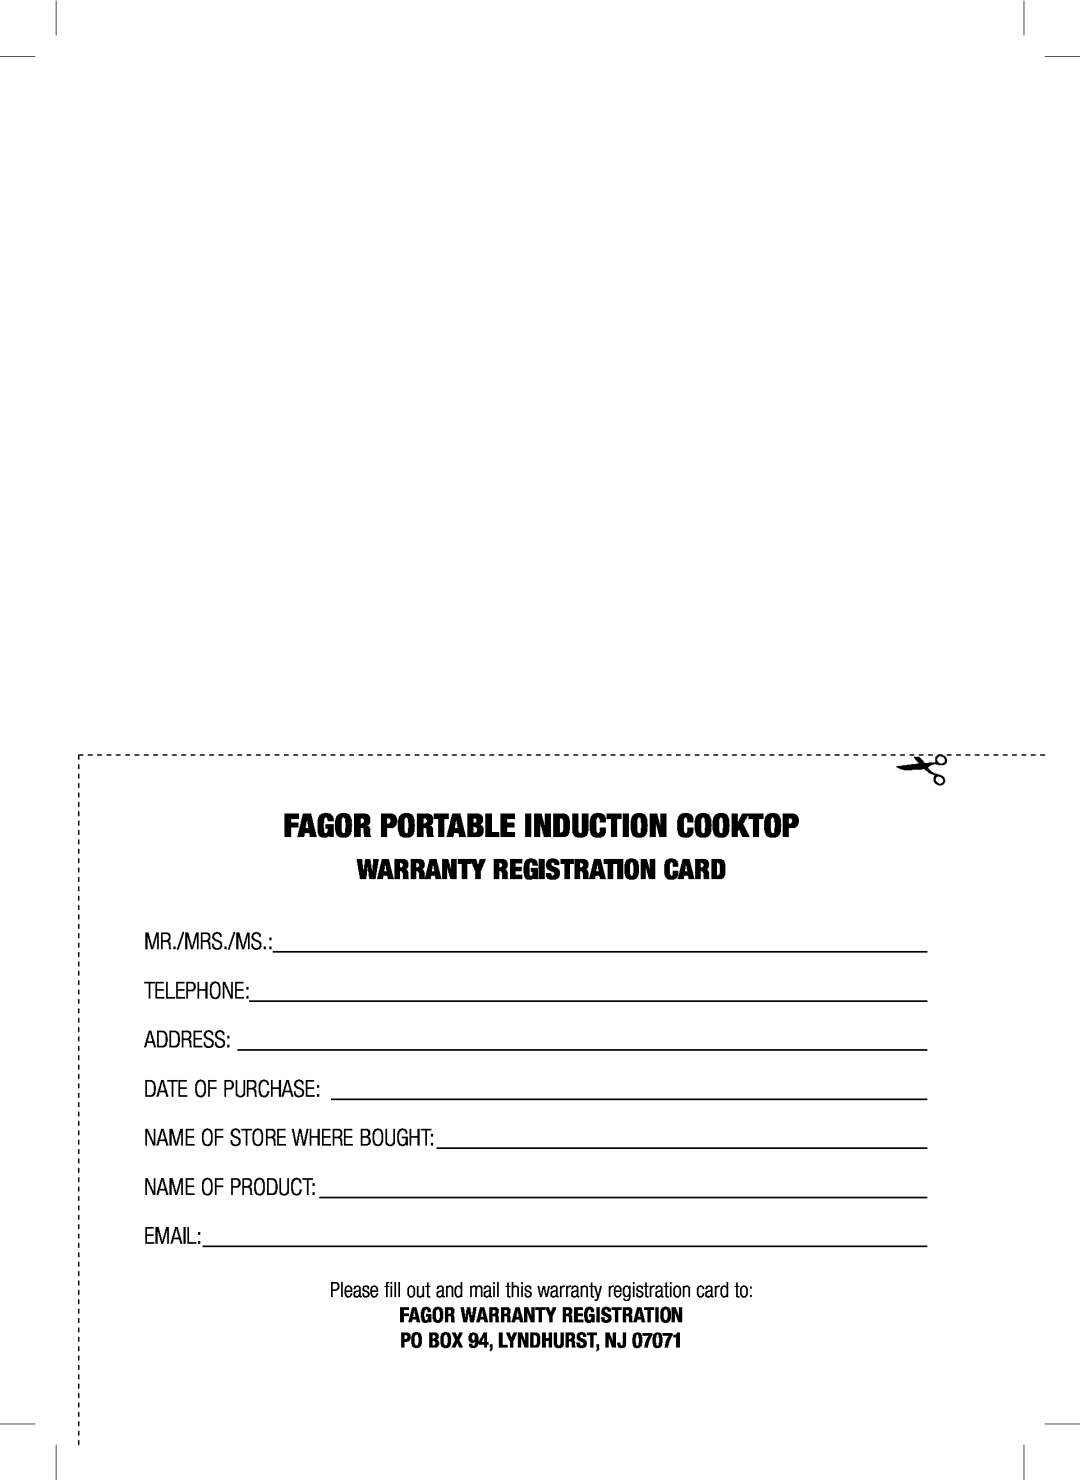 Fagor America user manual Fagor Portable Induction Cooktop, Warranty Registration Card 